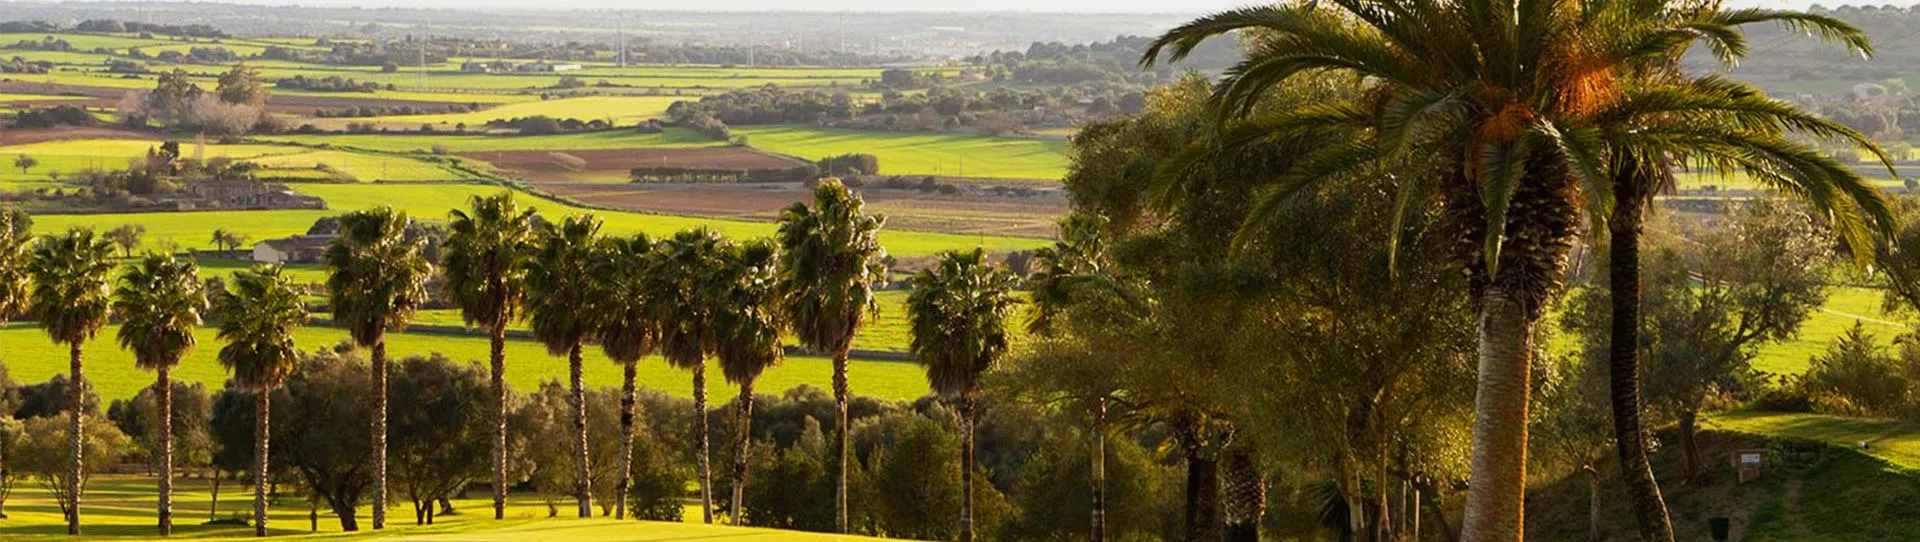 Spain golf courses - La Reserva Rotana Golf Course - Photo 3